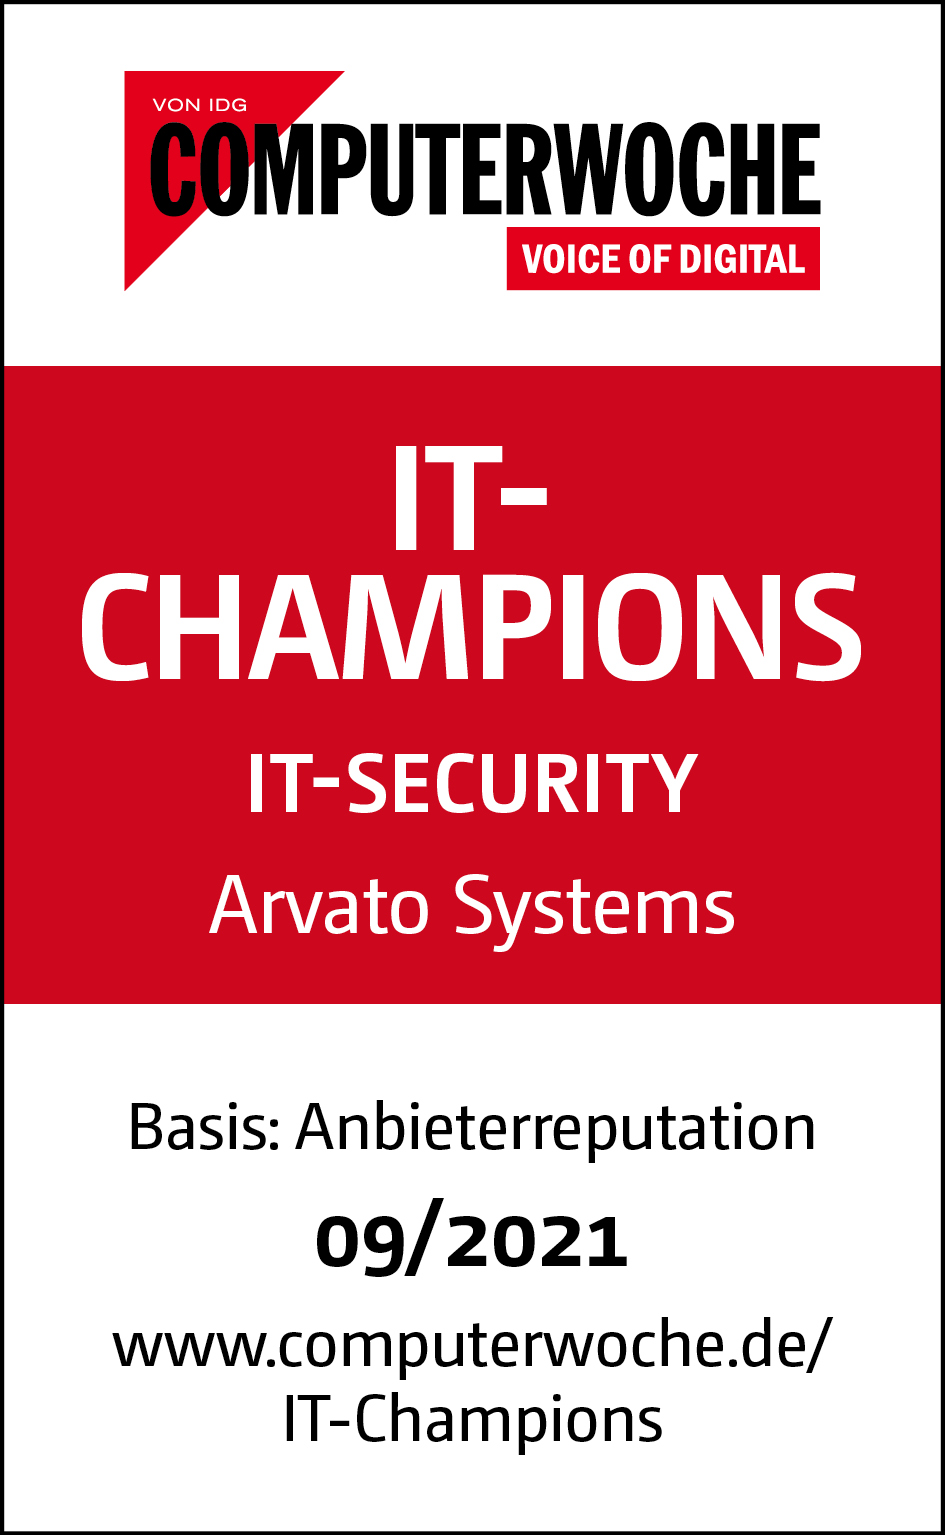 FAK_21117_ComputerWoche-Siegel_IT-Champions_IT-Security_Arvato_II